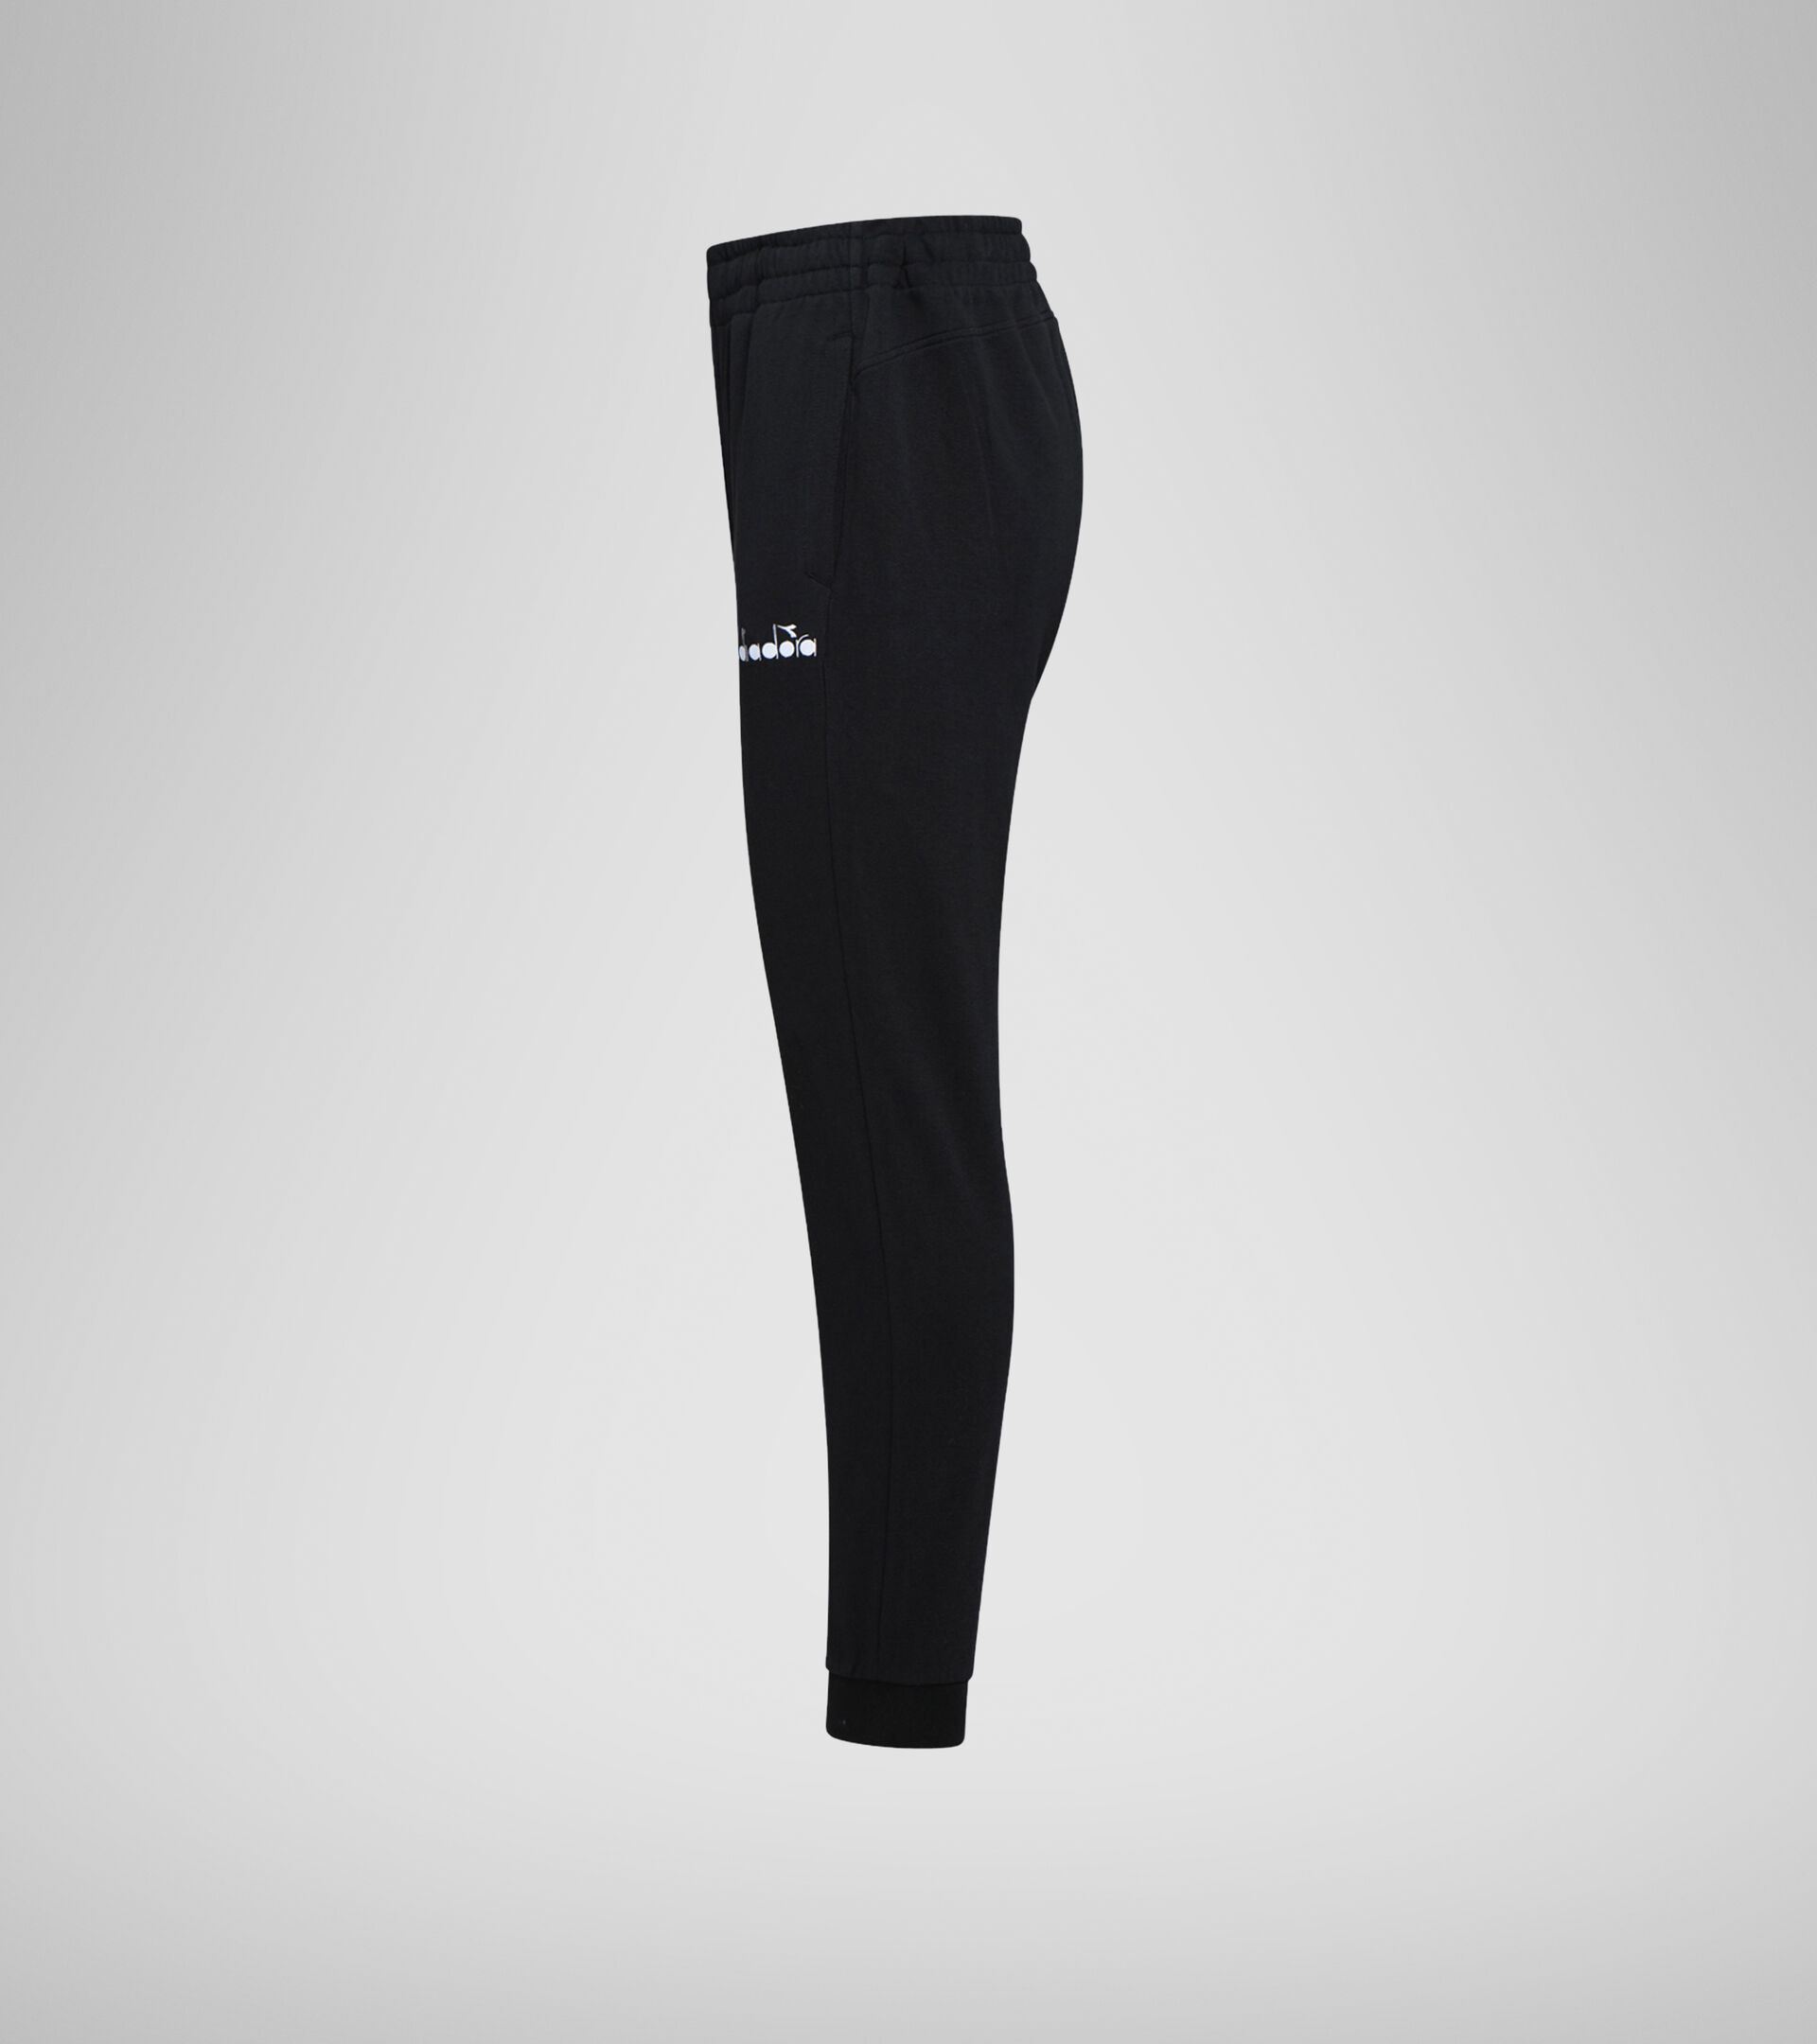 Sports trousers - Men PANT CUFF CORE BLACK - Diadora